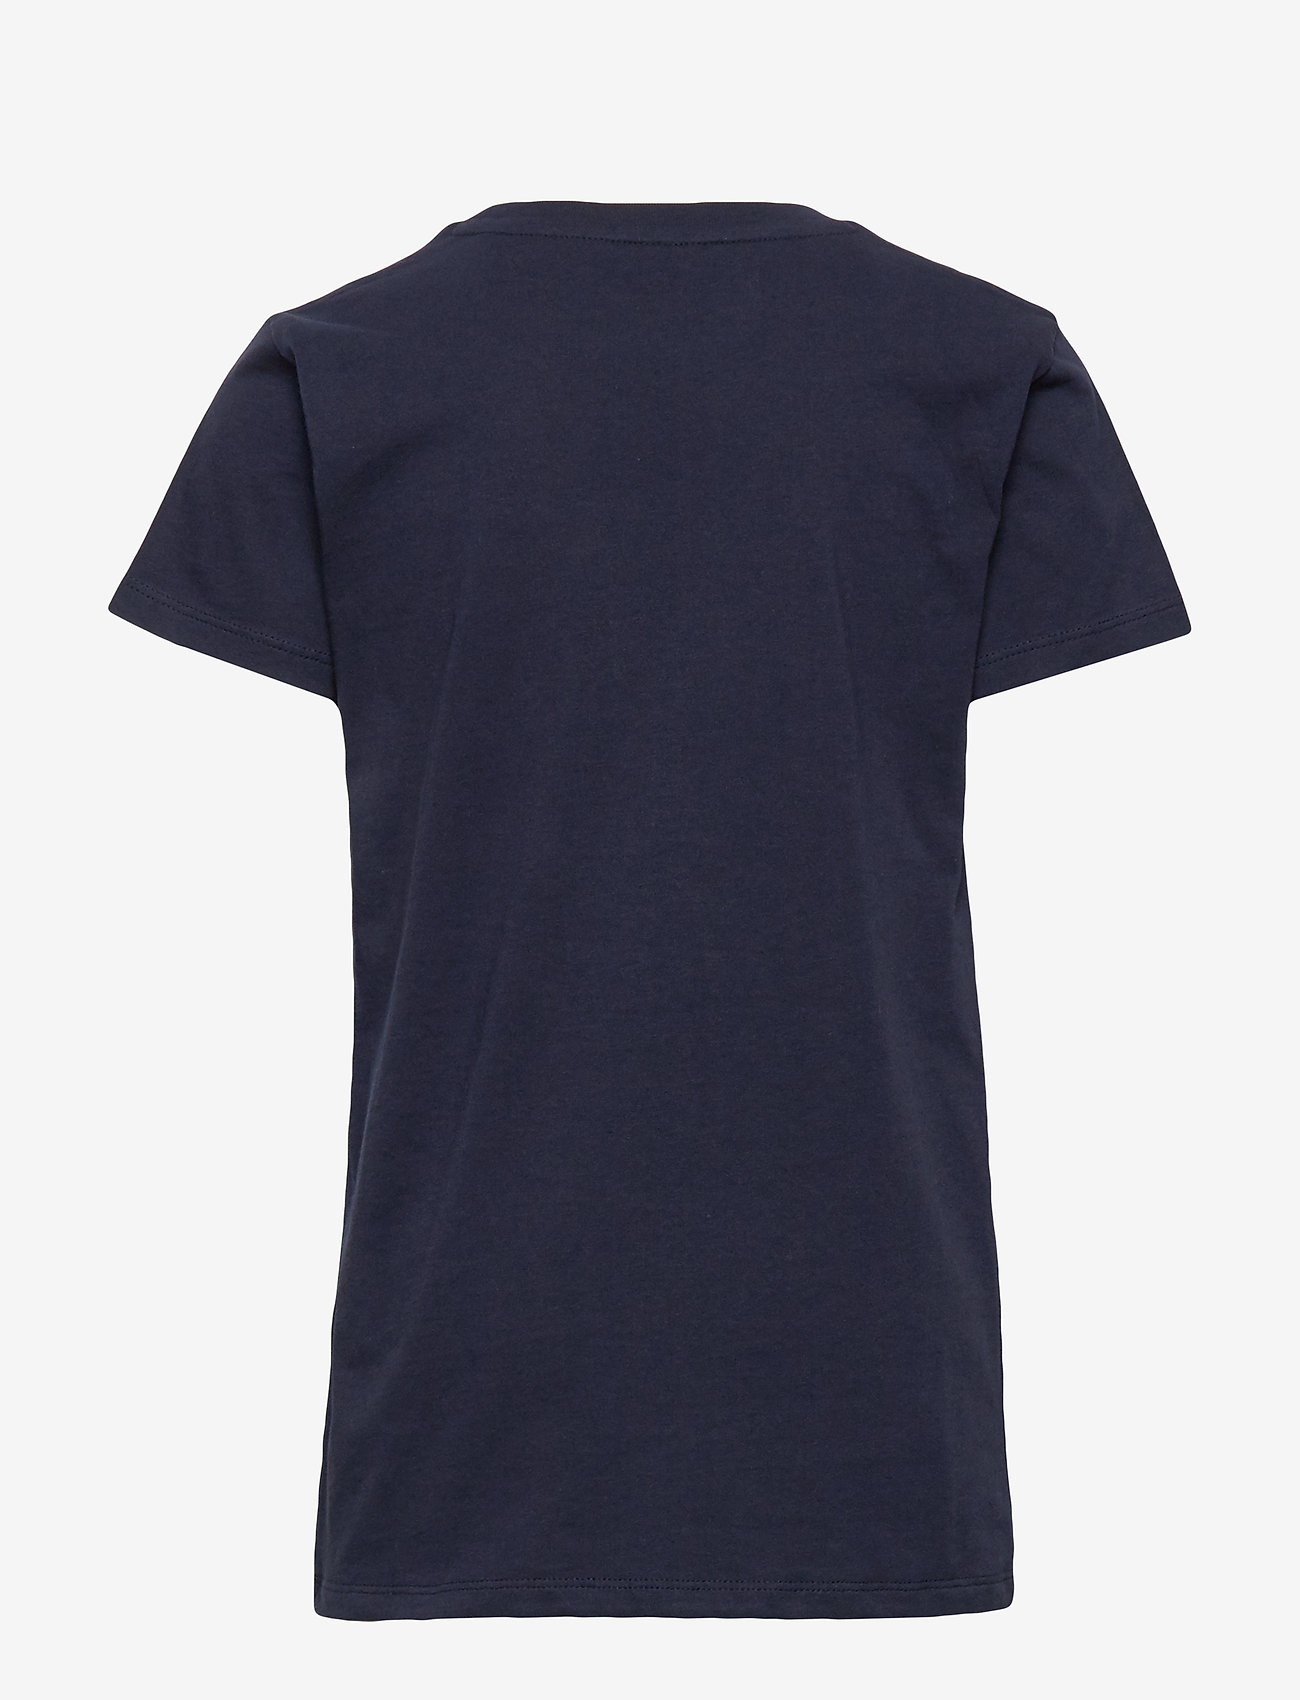 GANT - GANT SHIELD SS T-SHIRT - pattern short-sleeved t-shirt - evening blue - 1